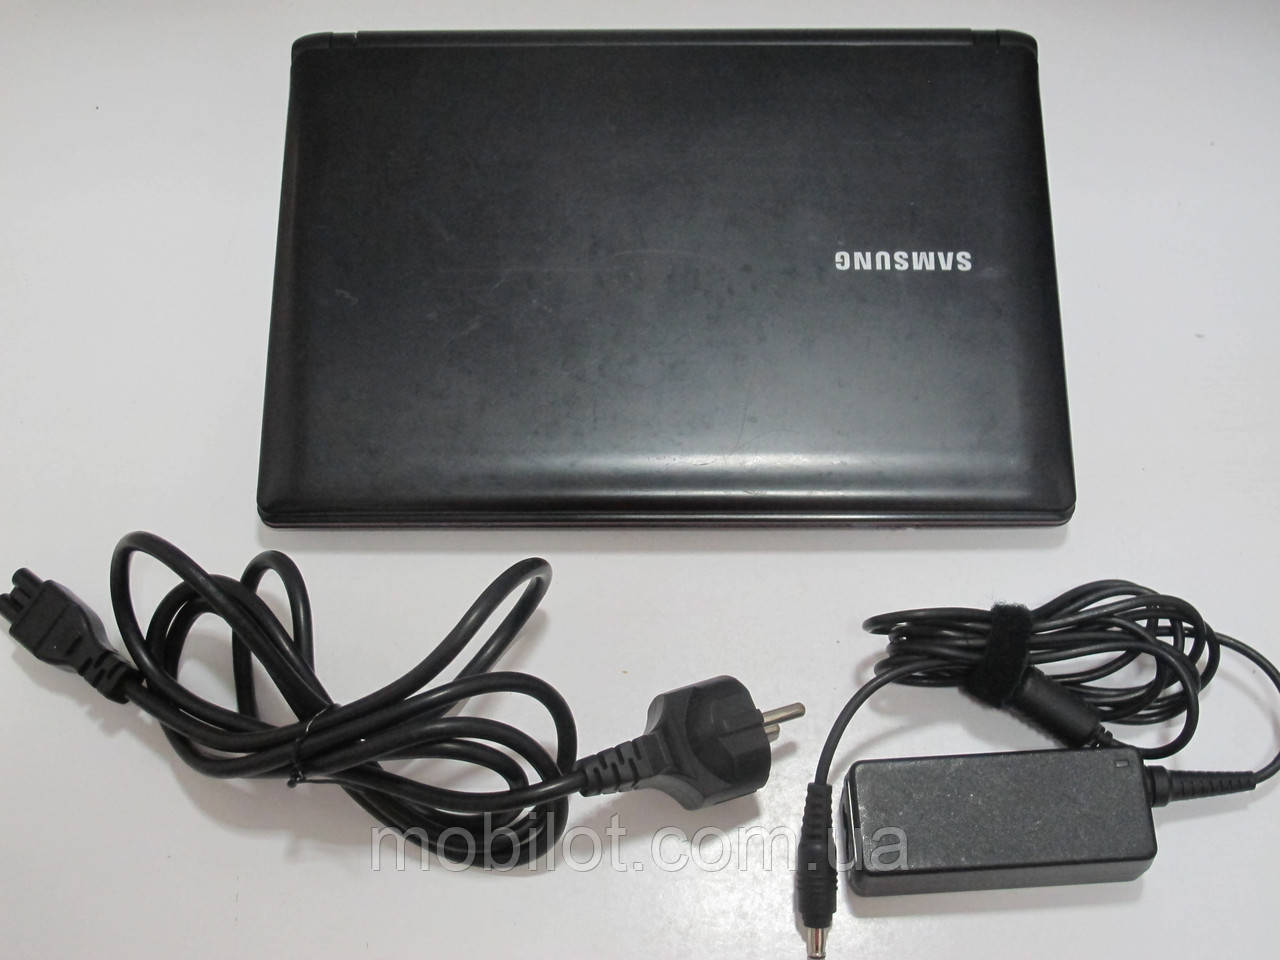 Ноутбук Samsung N143 Black (NR-7859) Нет в наличии